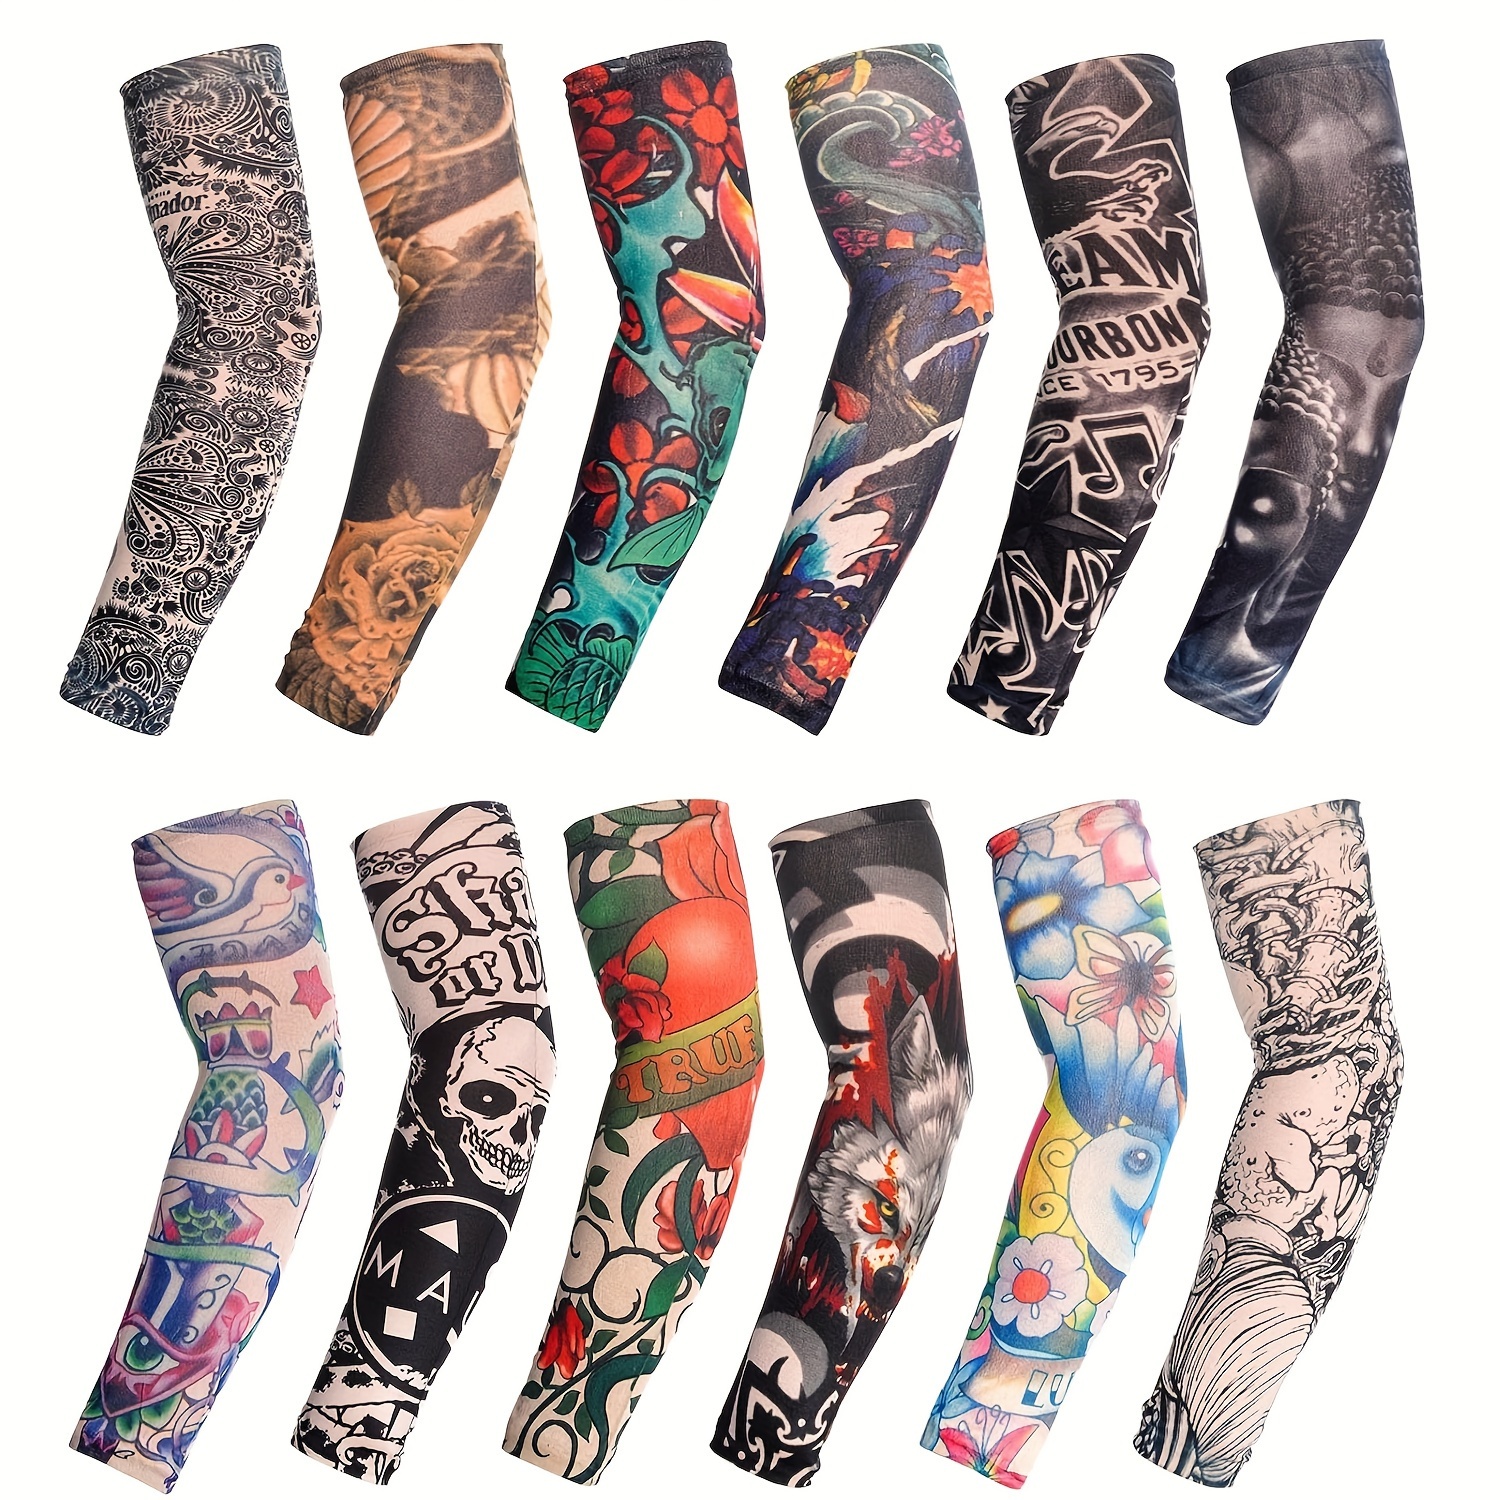 

12pcs Temporary Tattoo, Arm Sleeves, Temporary Tattoo Sleeves, Fake Temporary Tattoo Arm Sleeves, Halloween Tattoo Sleeves For Men Women